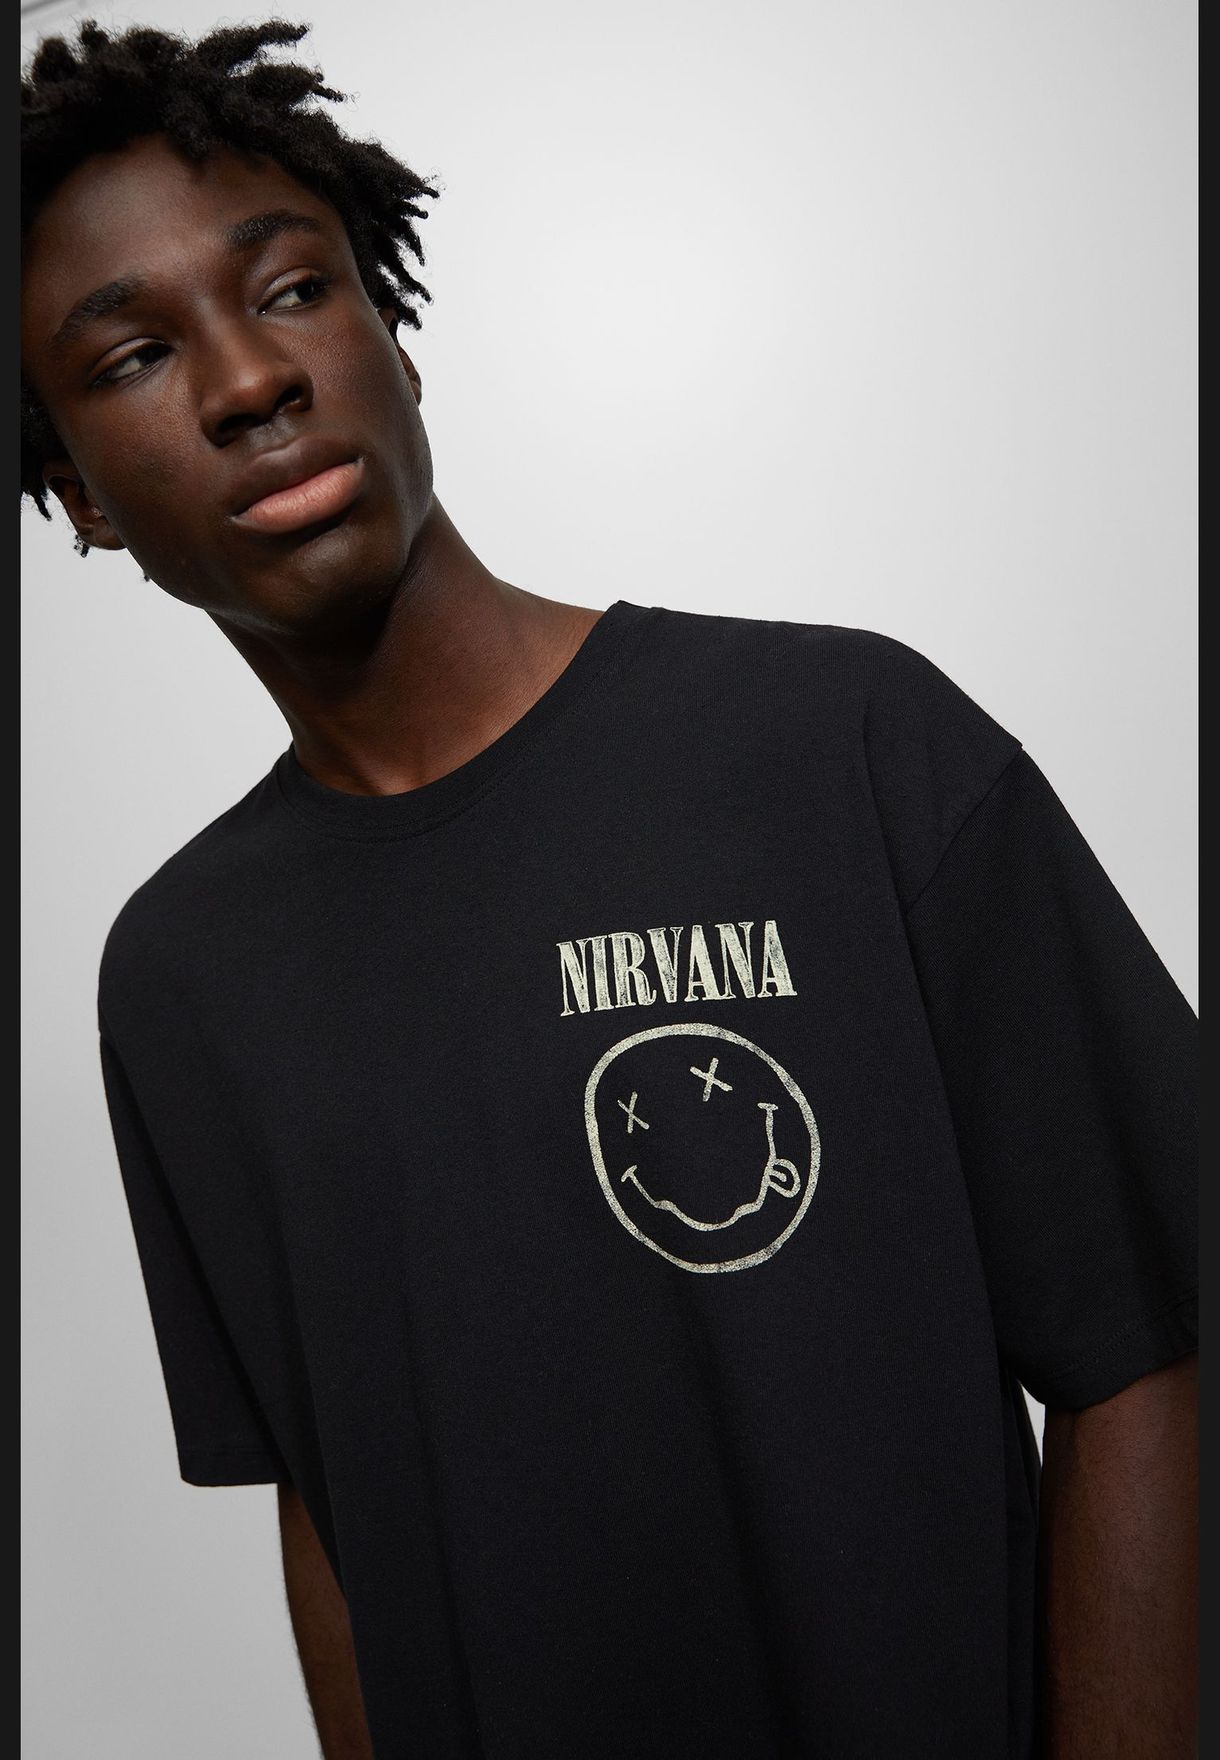 Black T-shirt with Nirvana logo